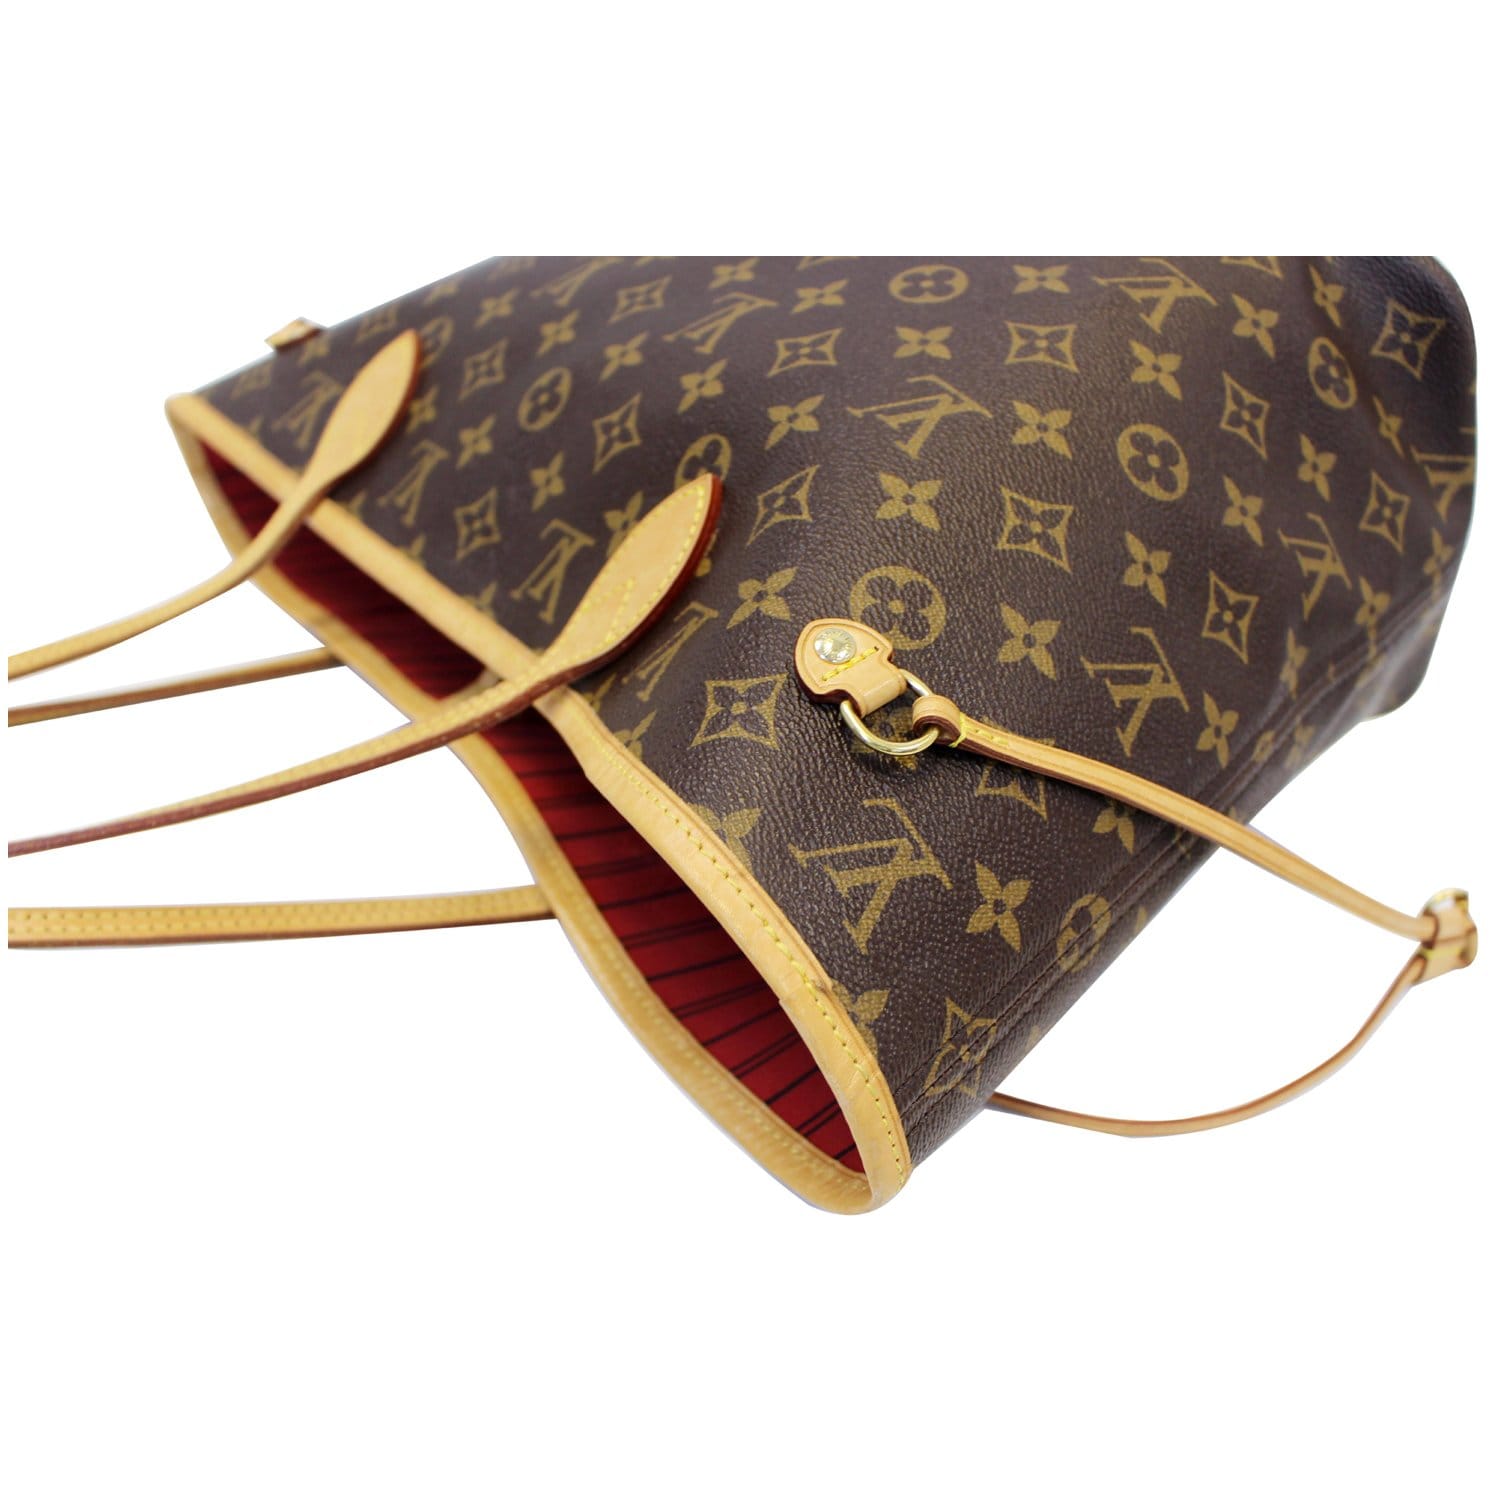 Louis Vuitton Neverfull MM Monogram Large Tote Bag Handbag